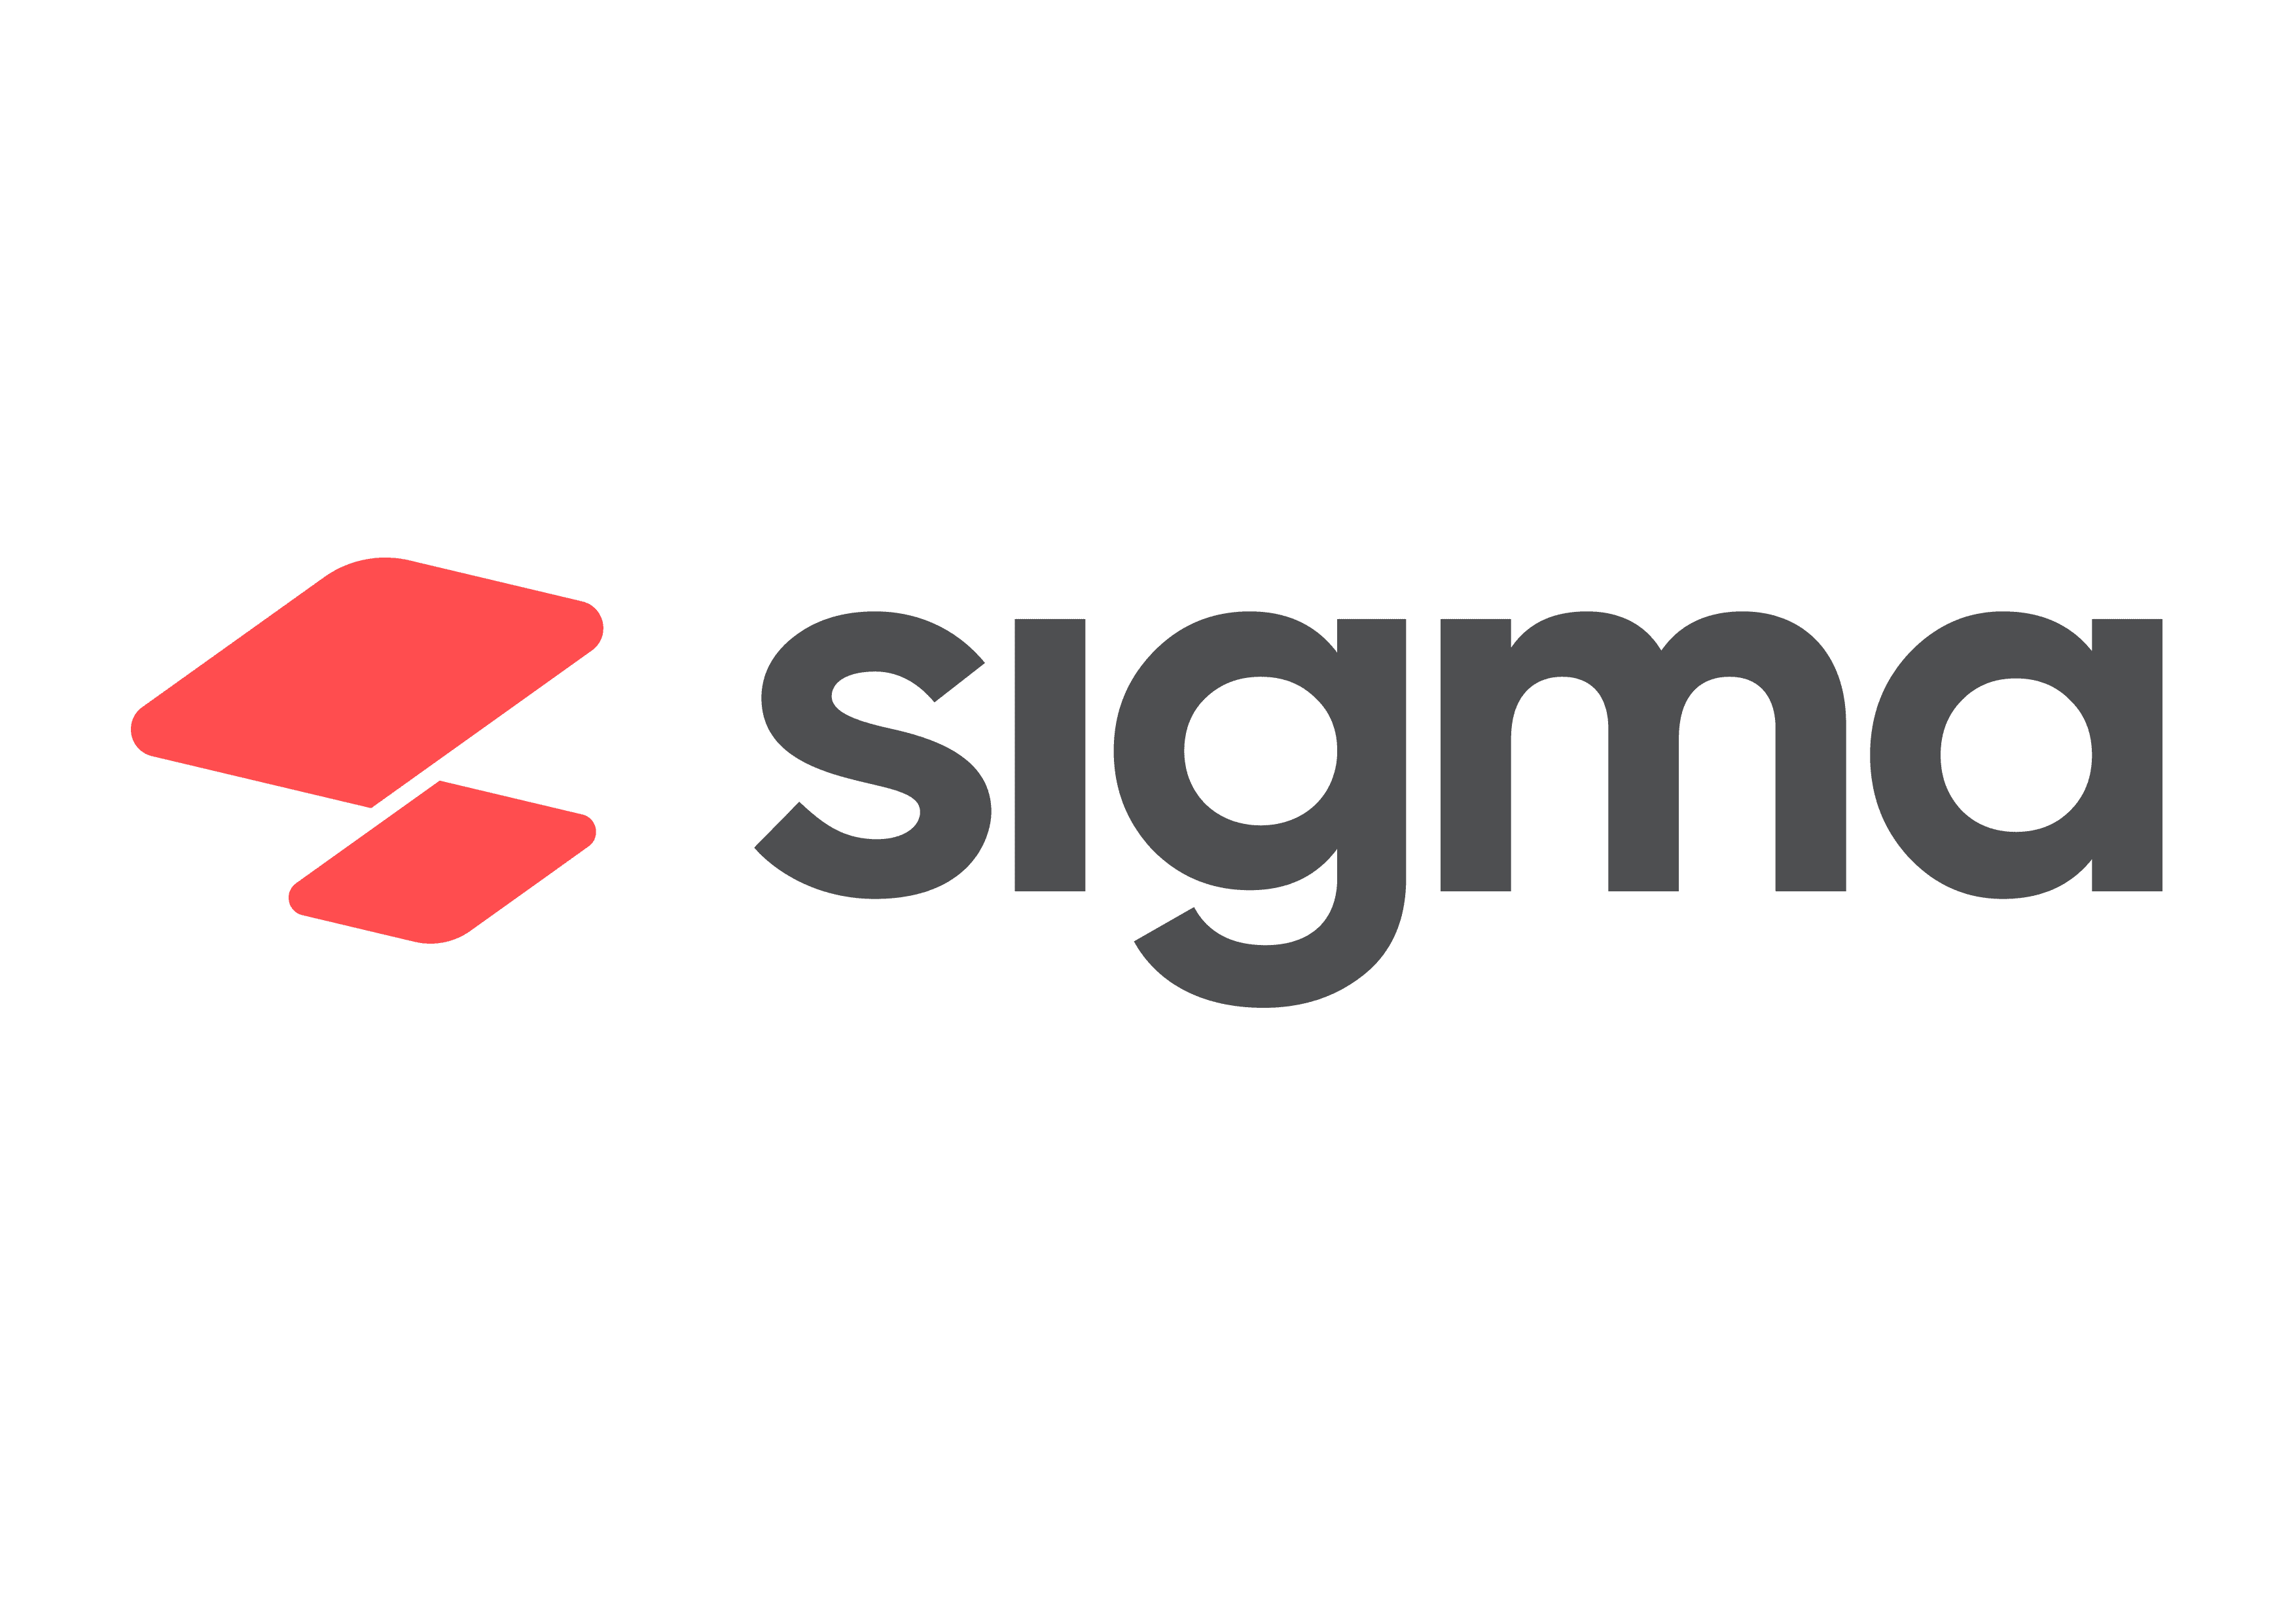 Sigma логотип. Атол Sigma лого. Sigma услуги. Sigma касса логотип.